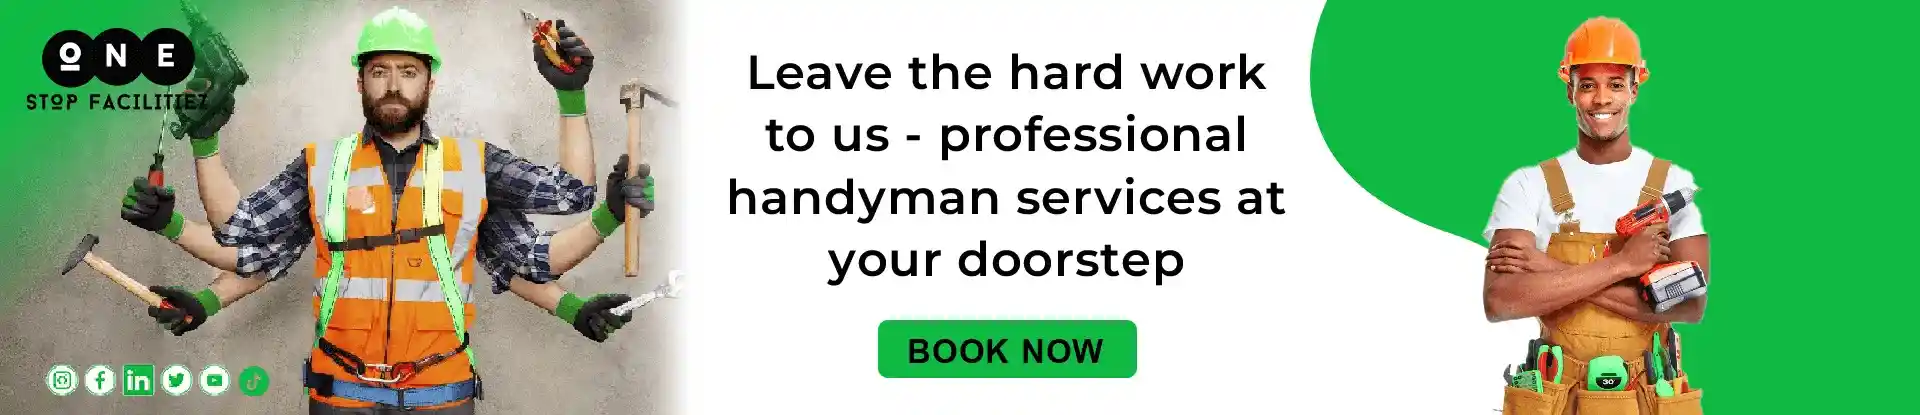 Handyman services Image